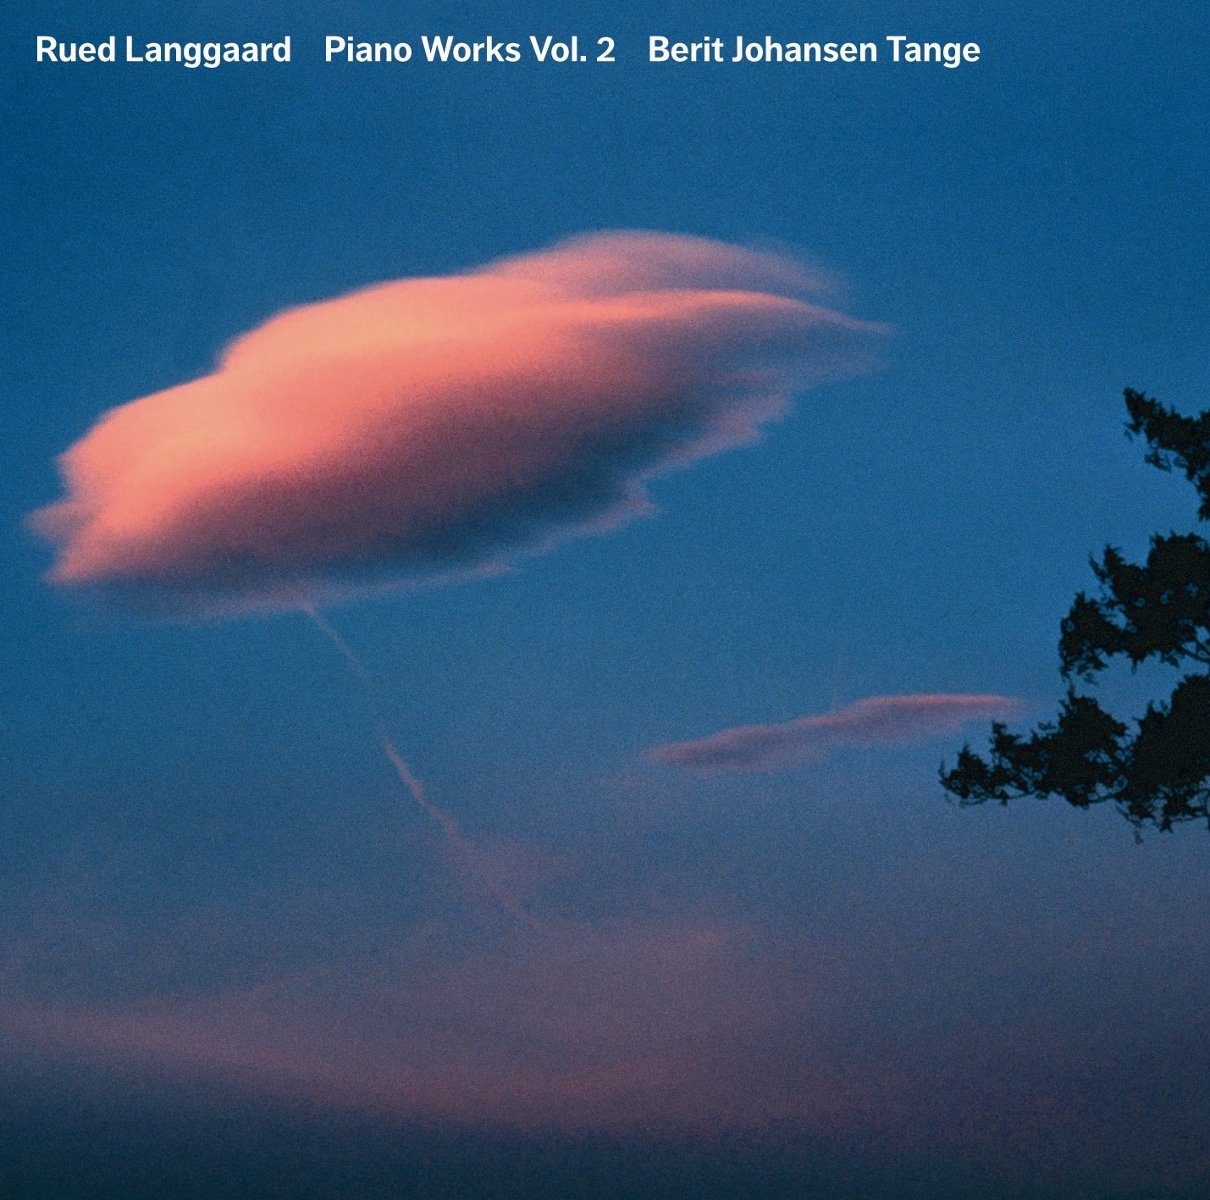 Klavierwerke Vol.2 - Berit Johansen Tange. (Superaudio CD)